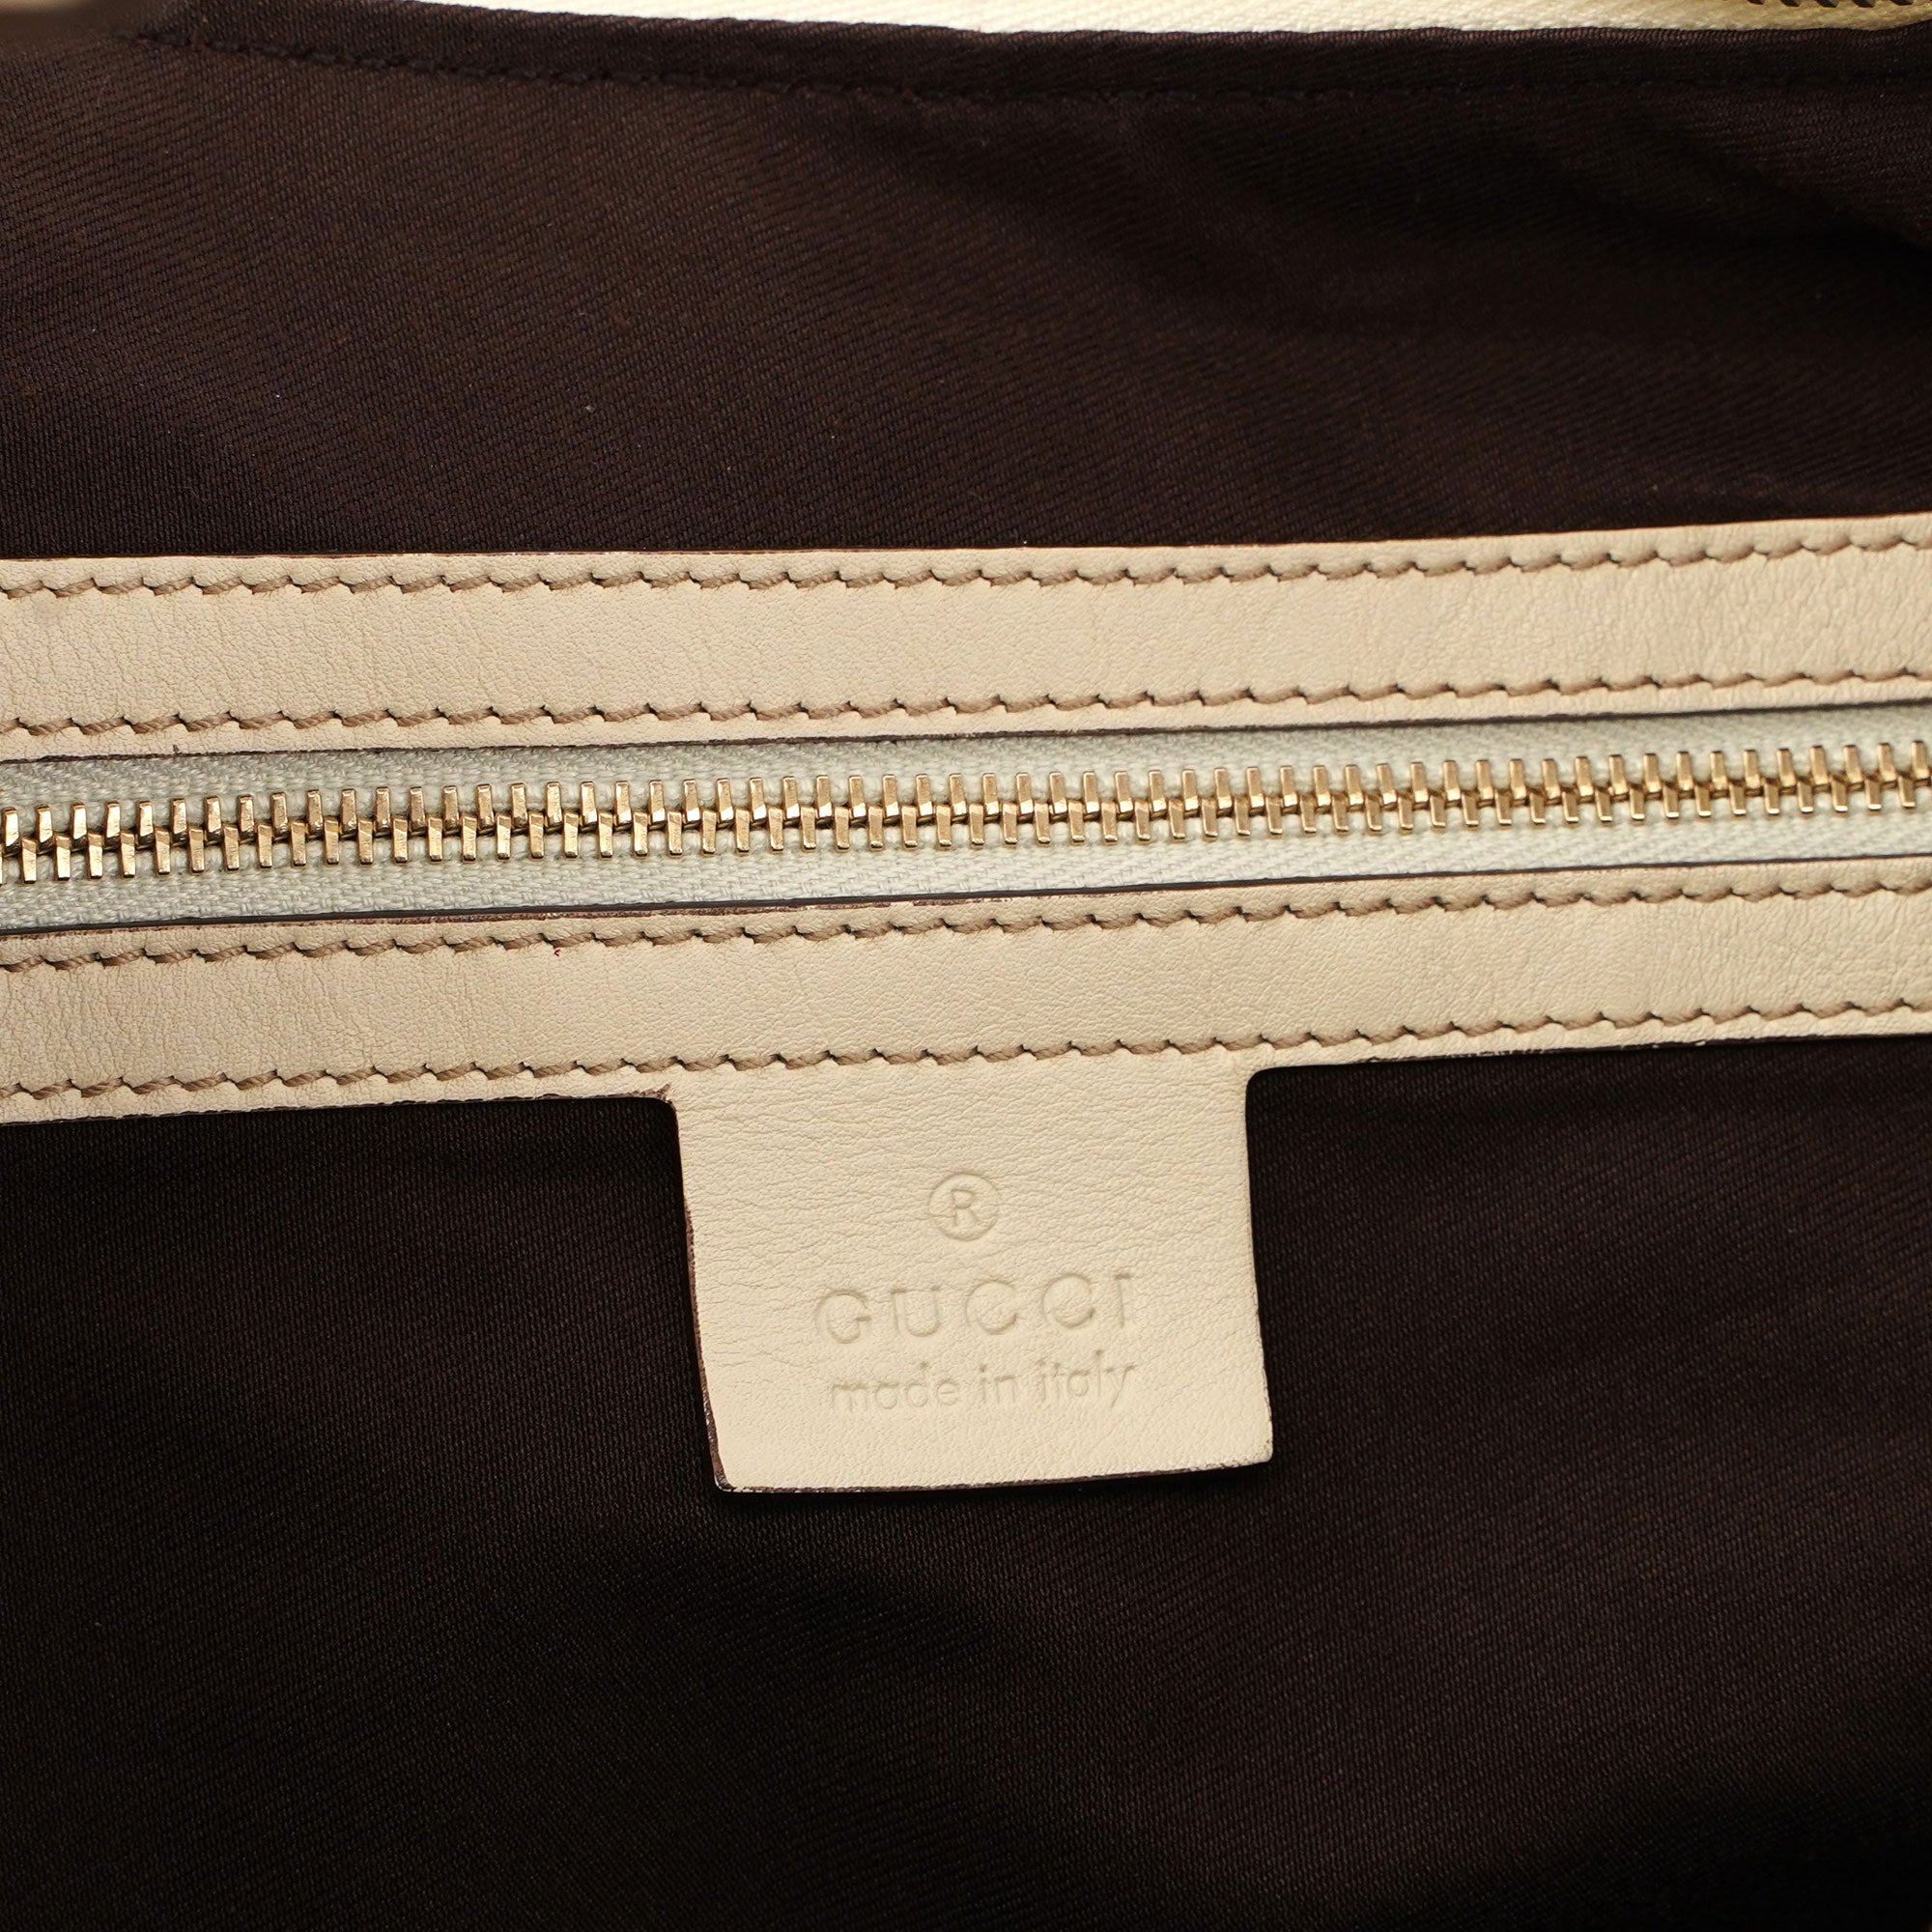 Gucci 5316. Gucci Off-White Leather Horsebit Shoulder Bag